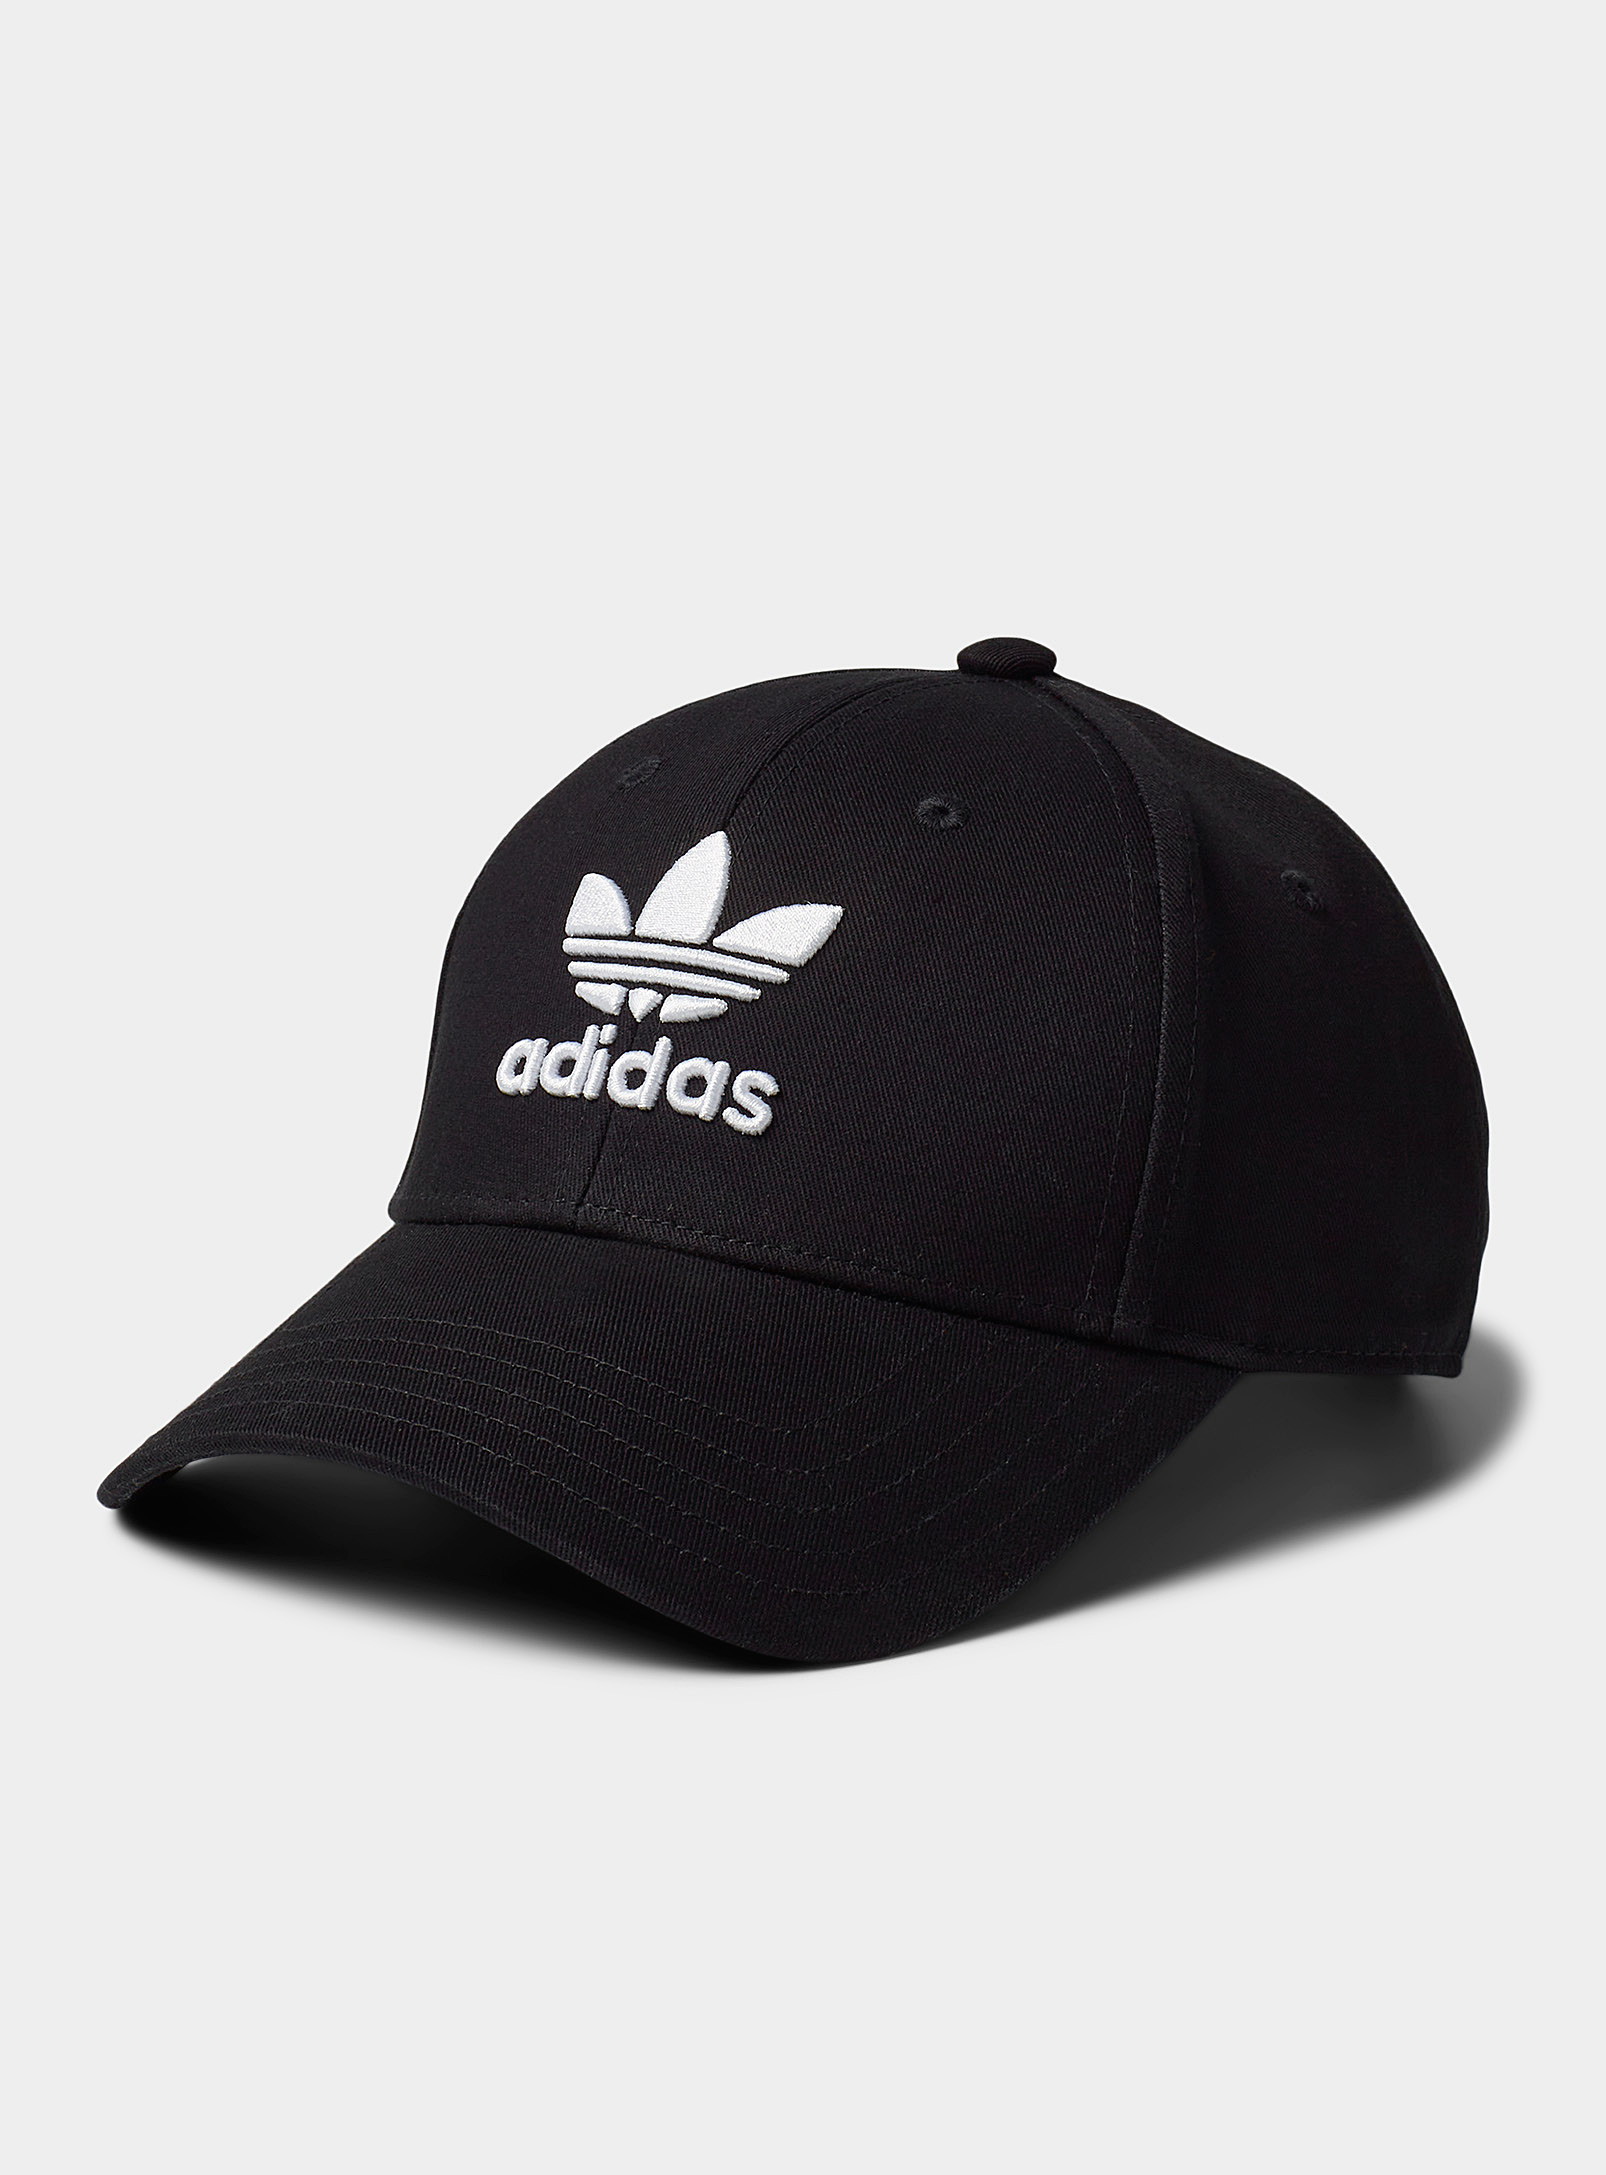 Adidas Originals Logo Embroidery Baseball Cap In Black